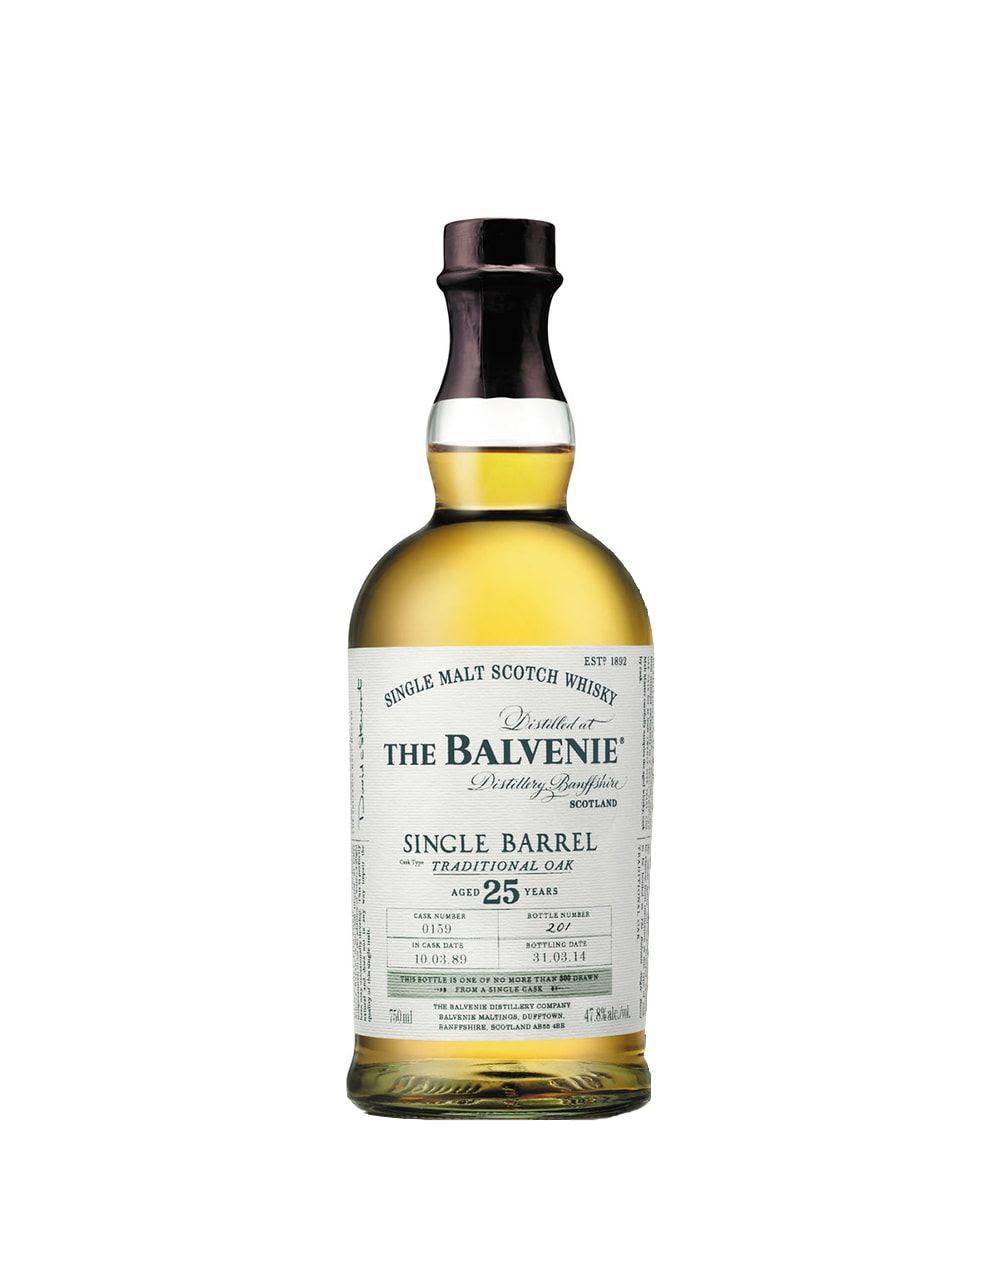 Balvenie 25 Year Old Single Barrel Traditional Oak Single Malt Scotch Whisky